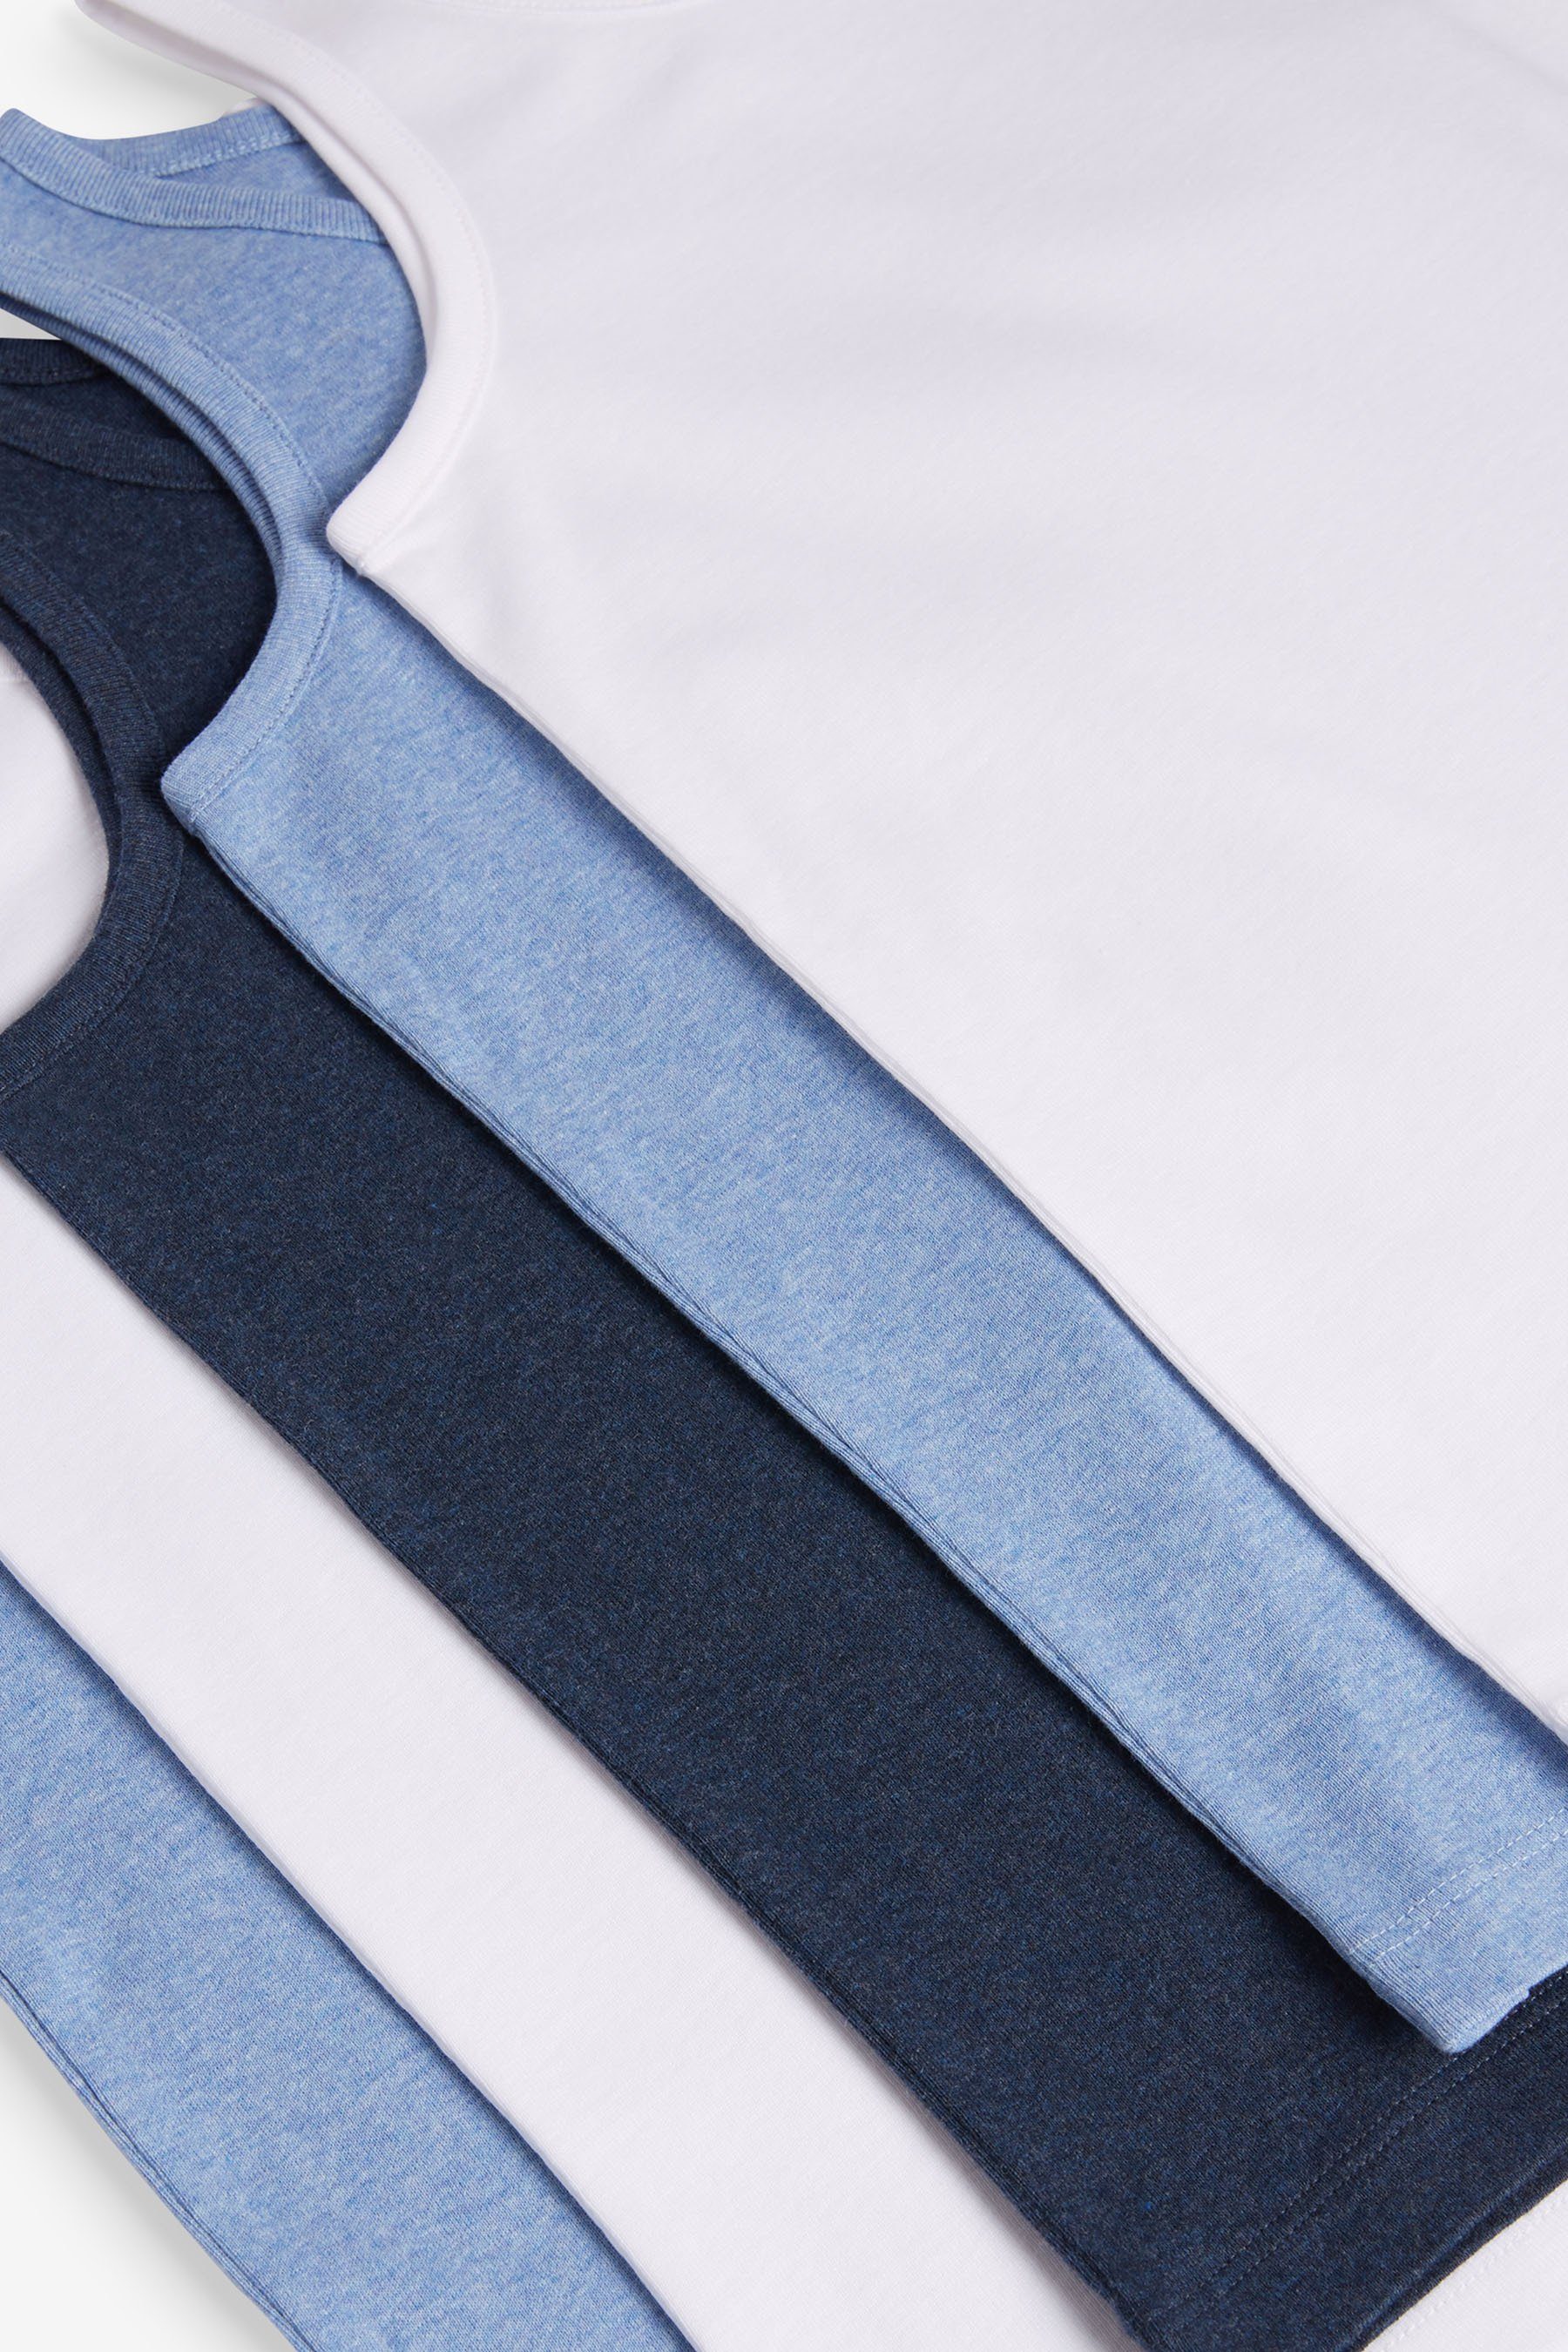 Next Unterhemd Unterhemden Blue/Grey aus, 5er-Pack (5-St)